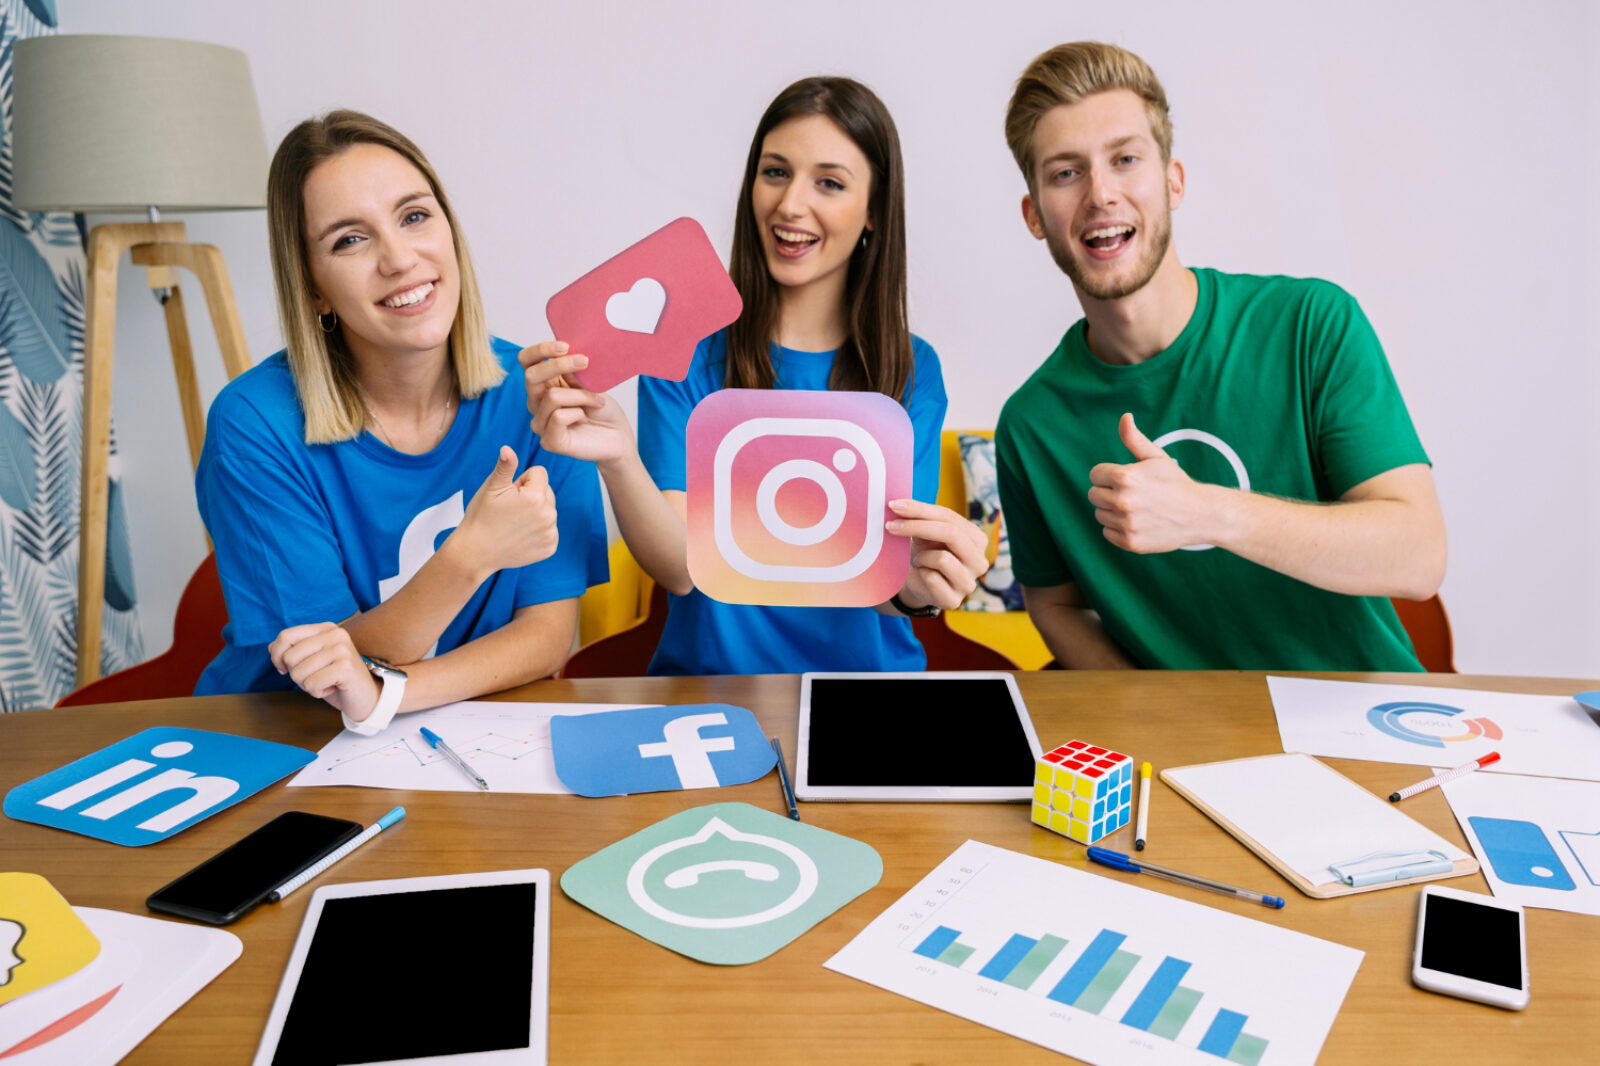 Ways to Be Successful at Social Media Marketing